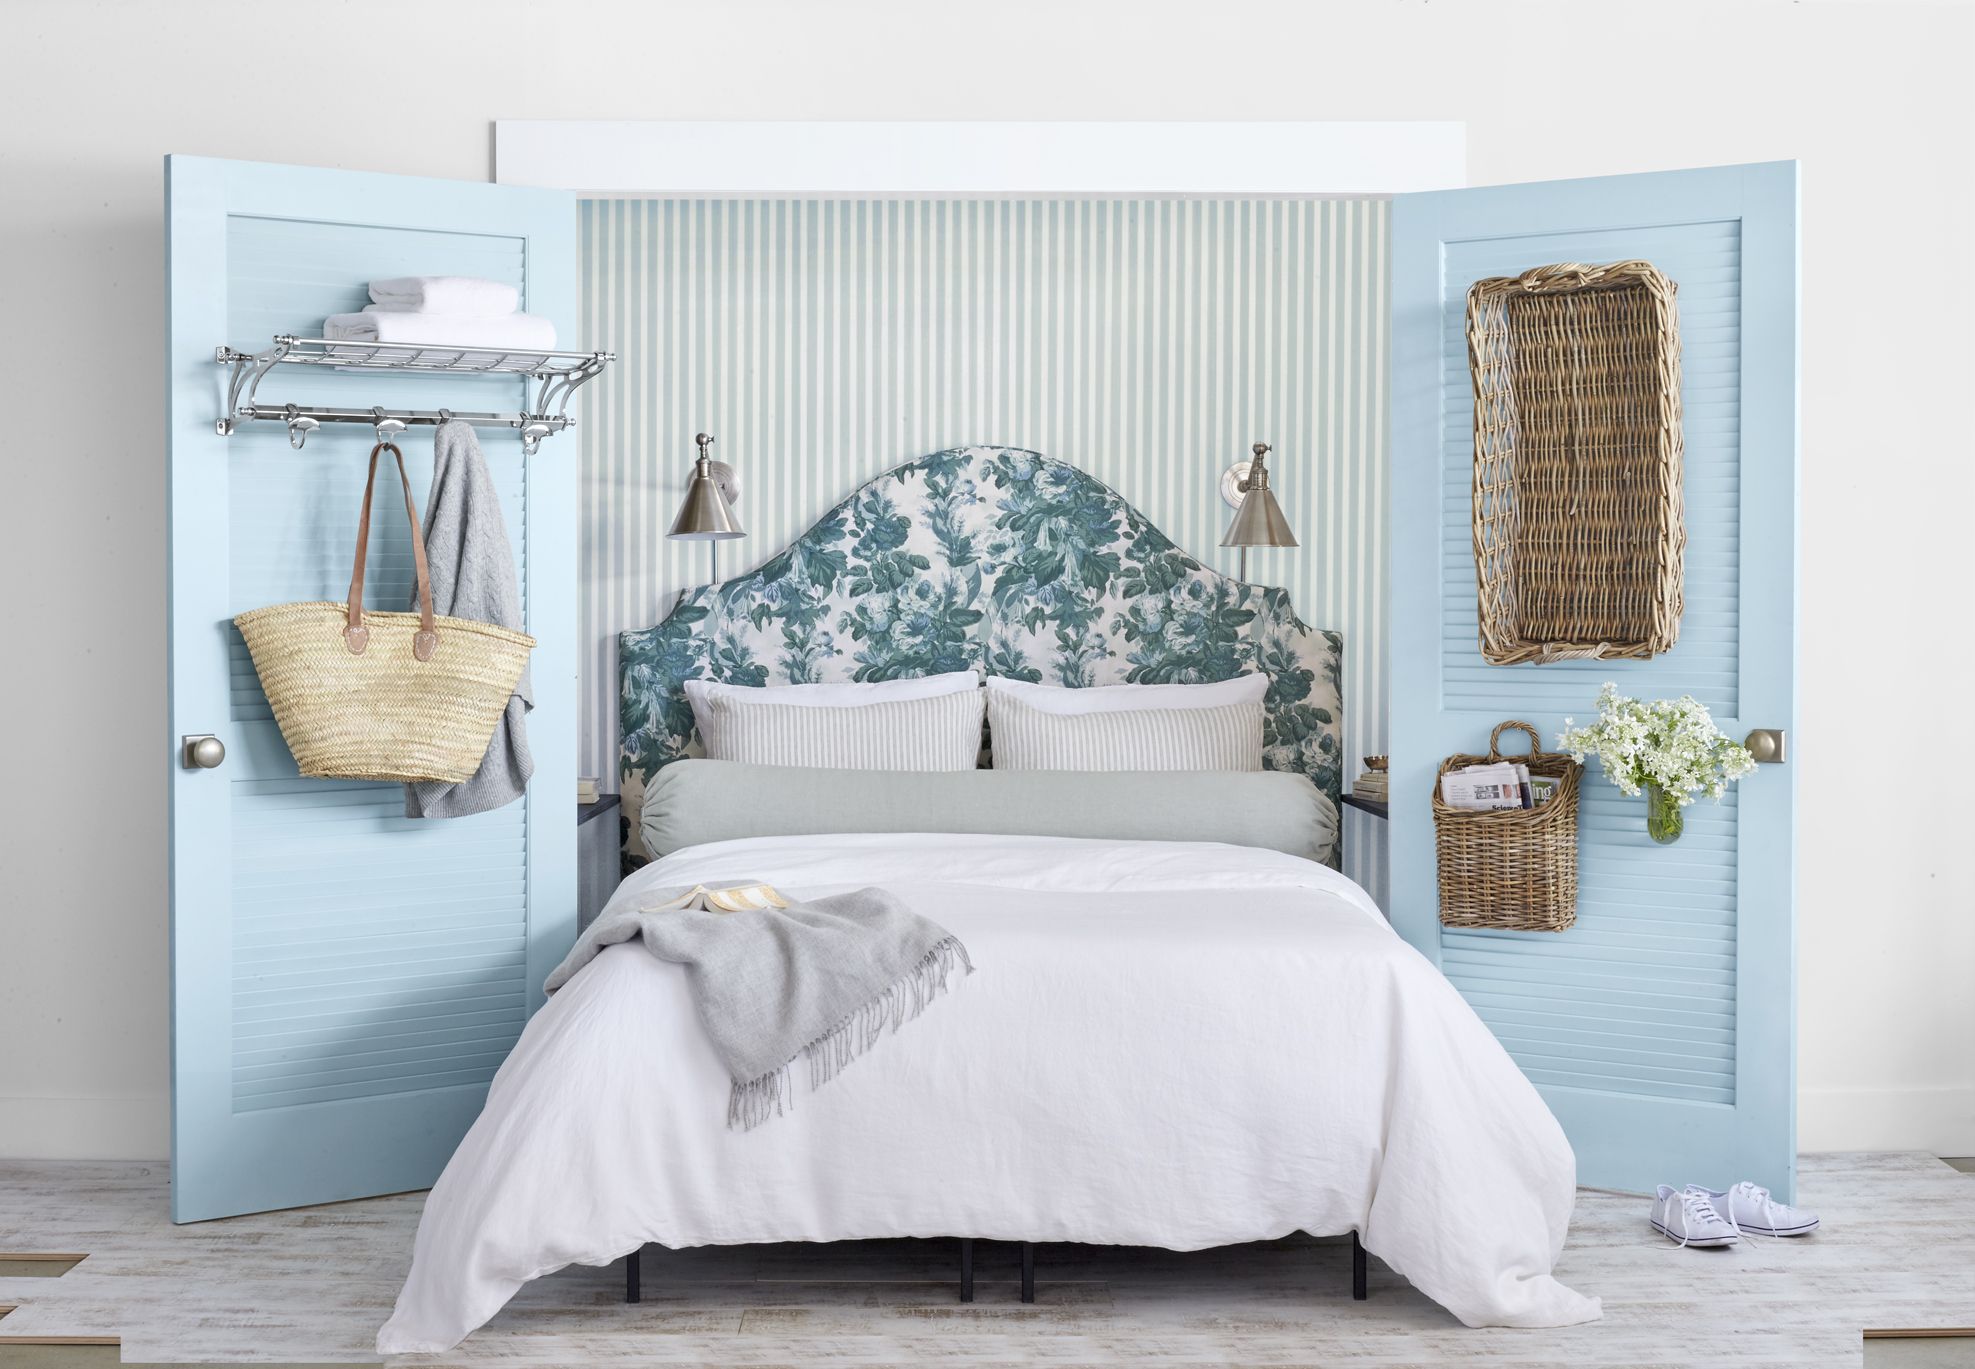 100 Bedroom Decorating Ideas In 2021 Designs For Beautiful Bedrooms